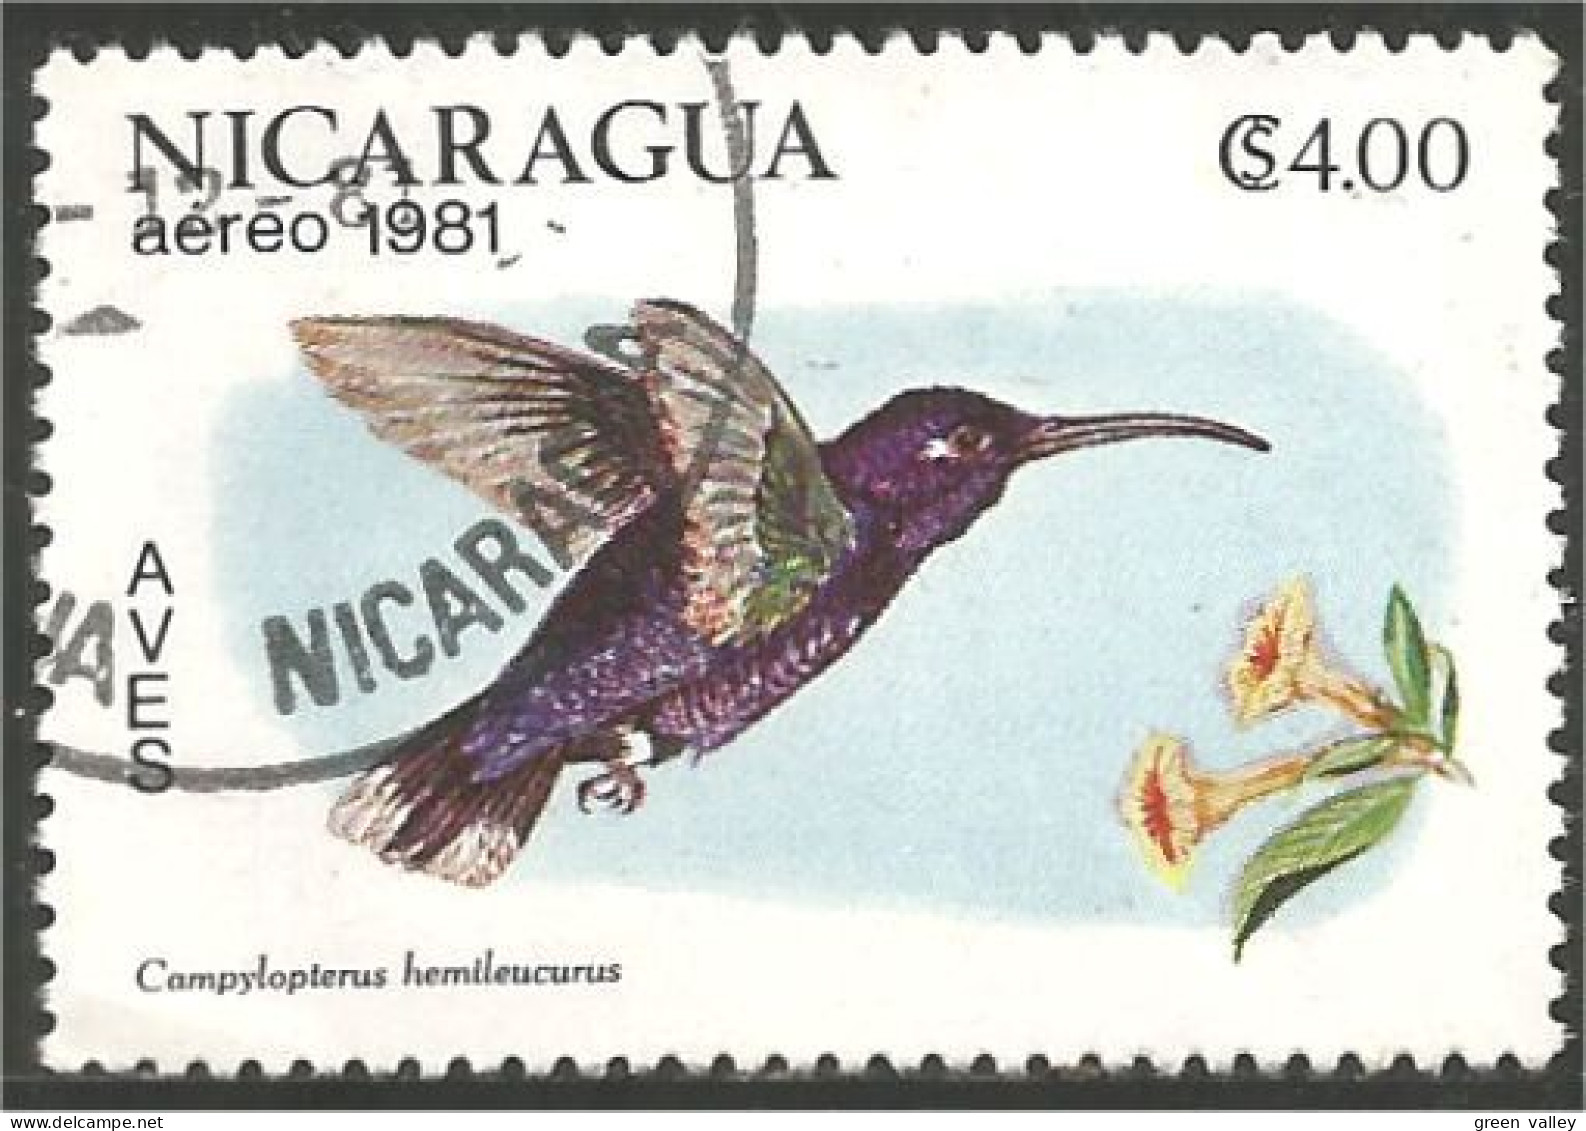 684 Nicaragua Oiseau-mouche Colibri Hummingbird Kolibrie Kolibri (NIC-439) - Segler & Kolibris